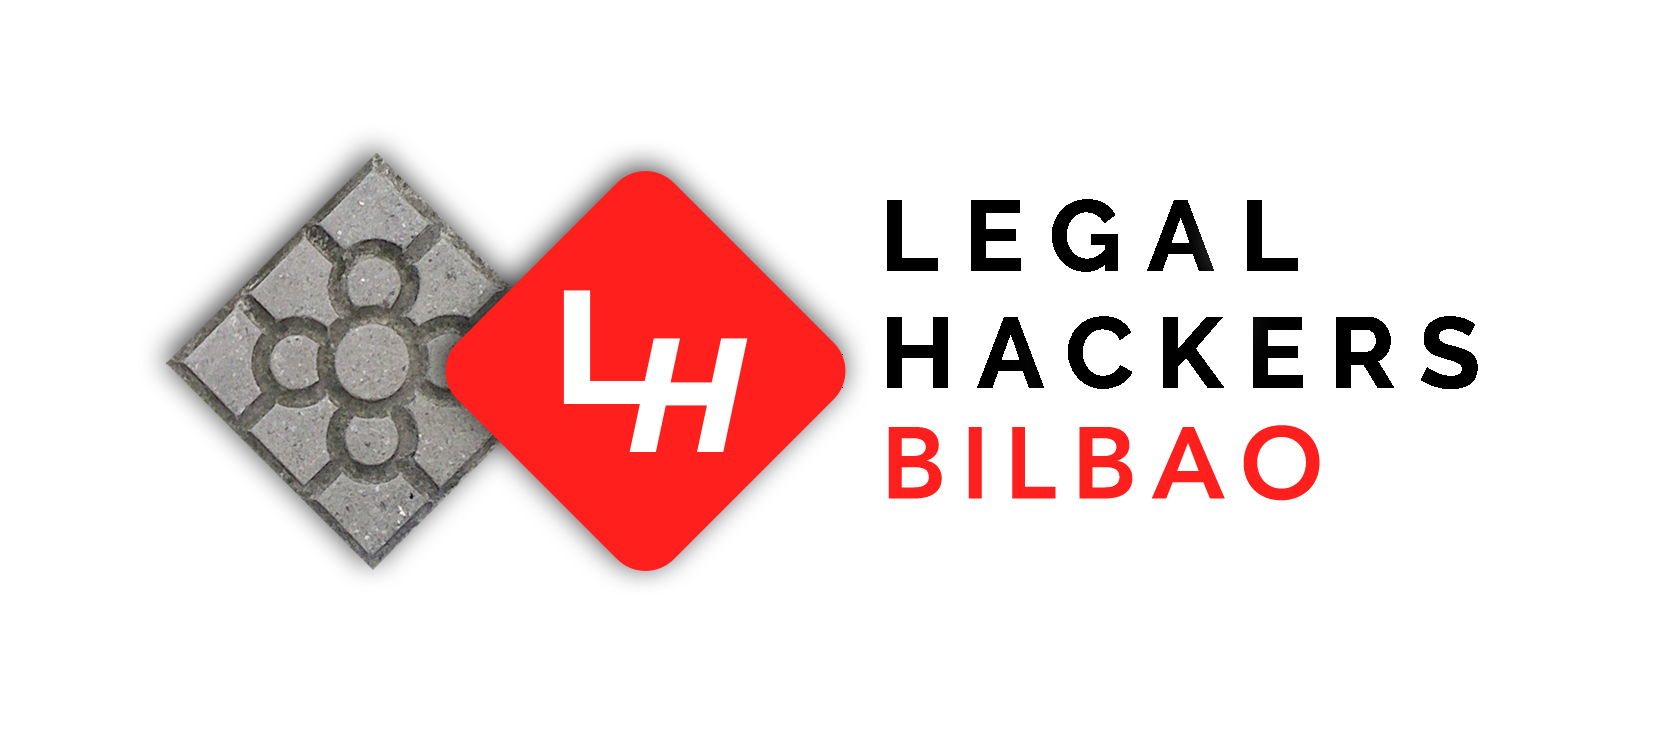 Legal hackers Bilbao Euskadi